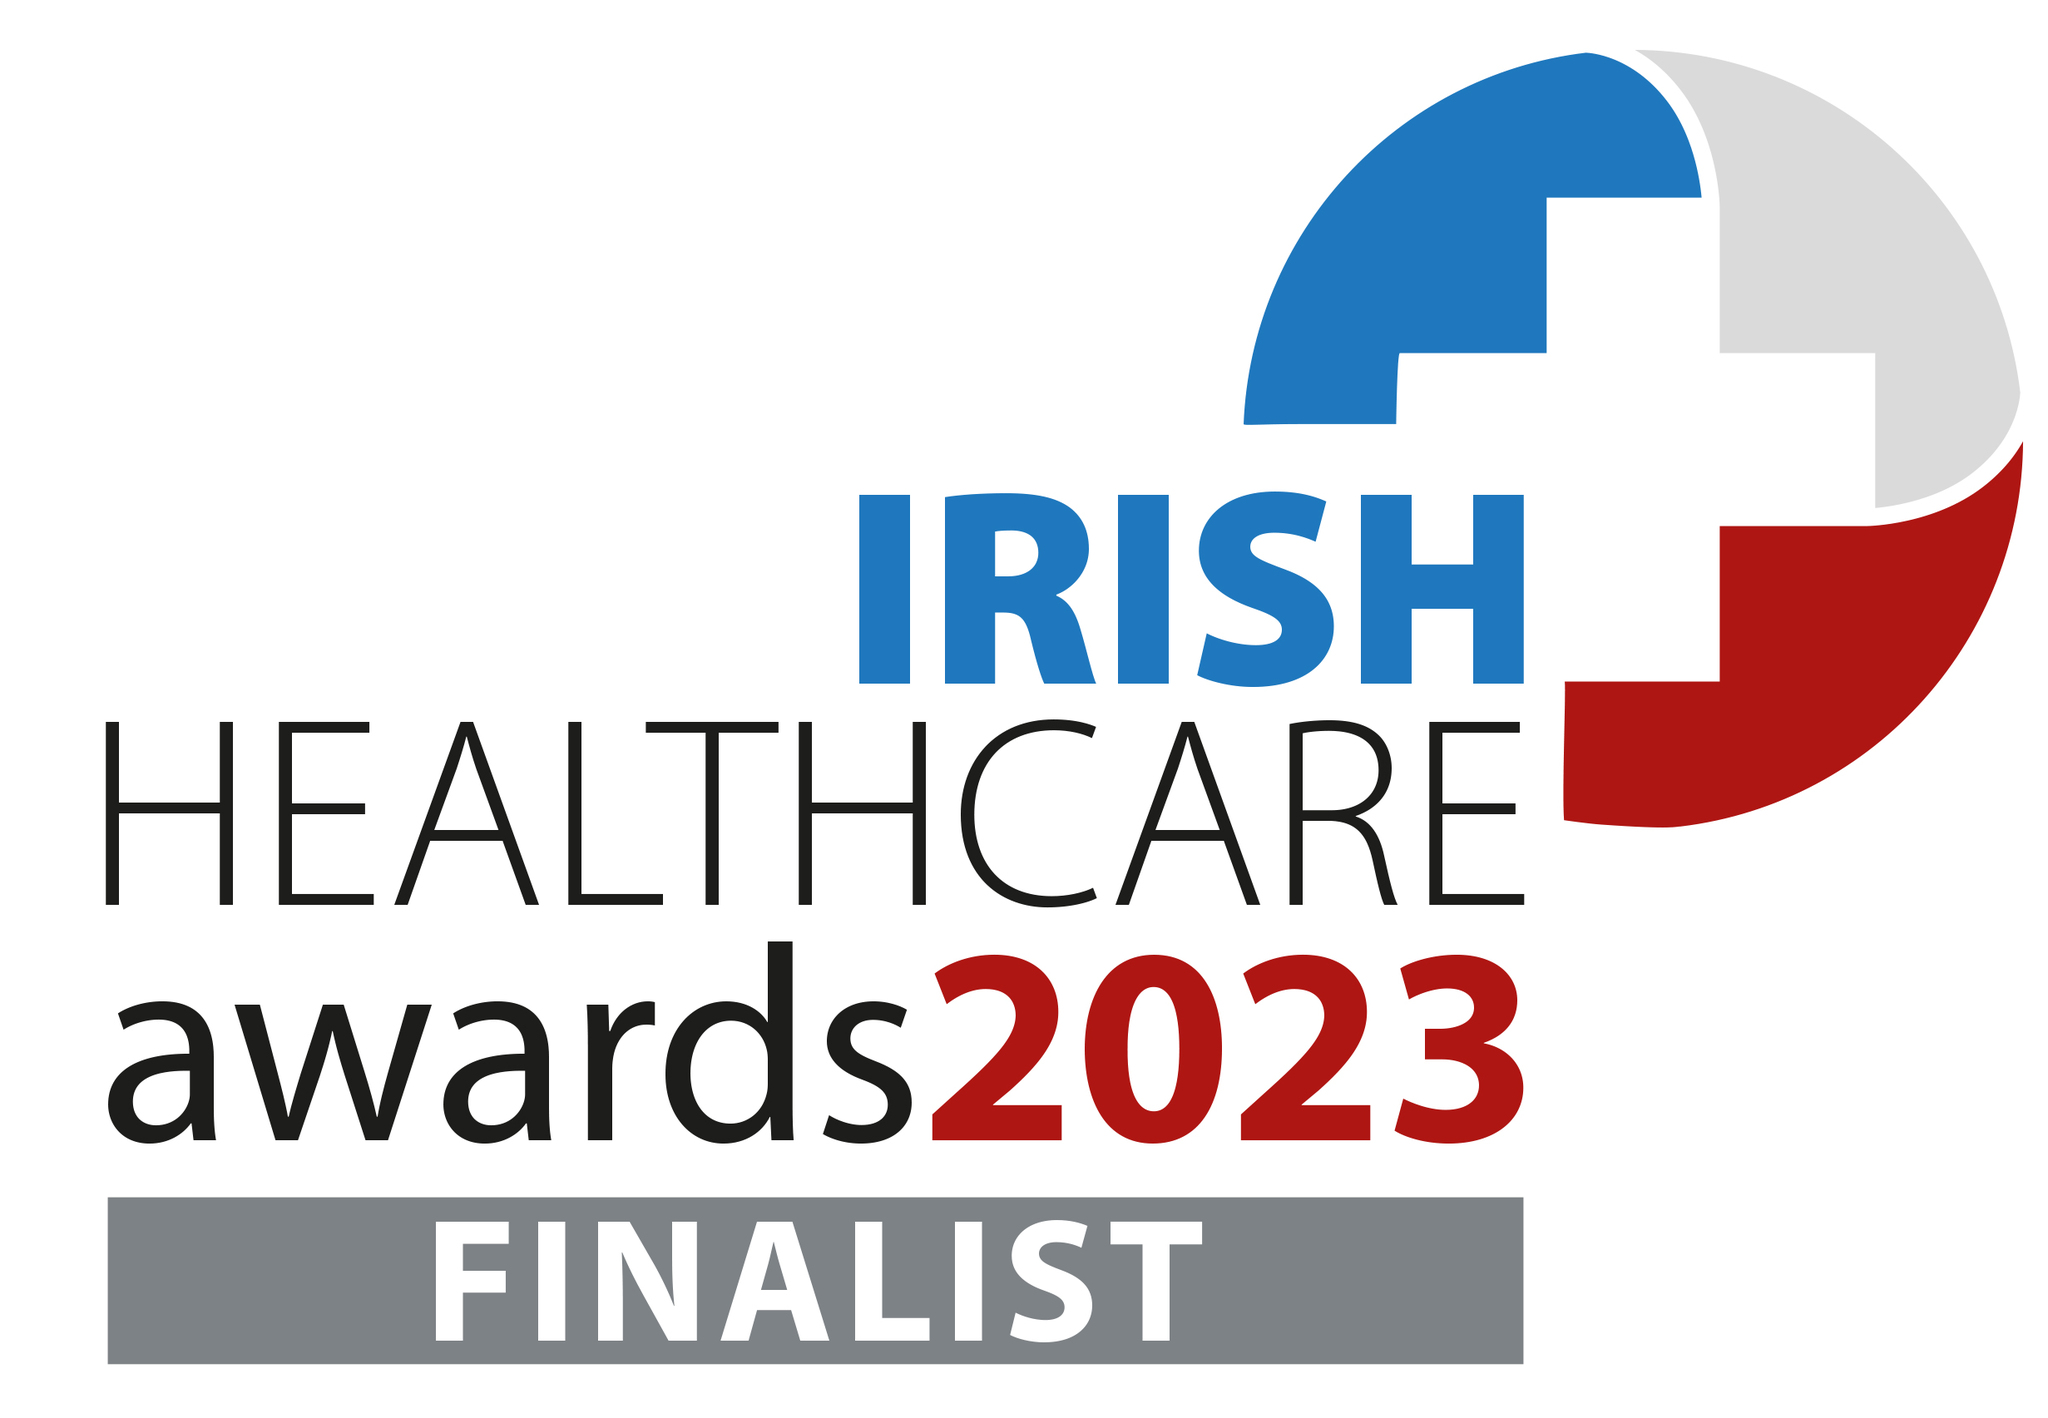 Irish Healthcare Awards 2023 Finalist logo